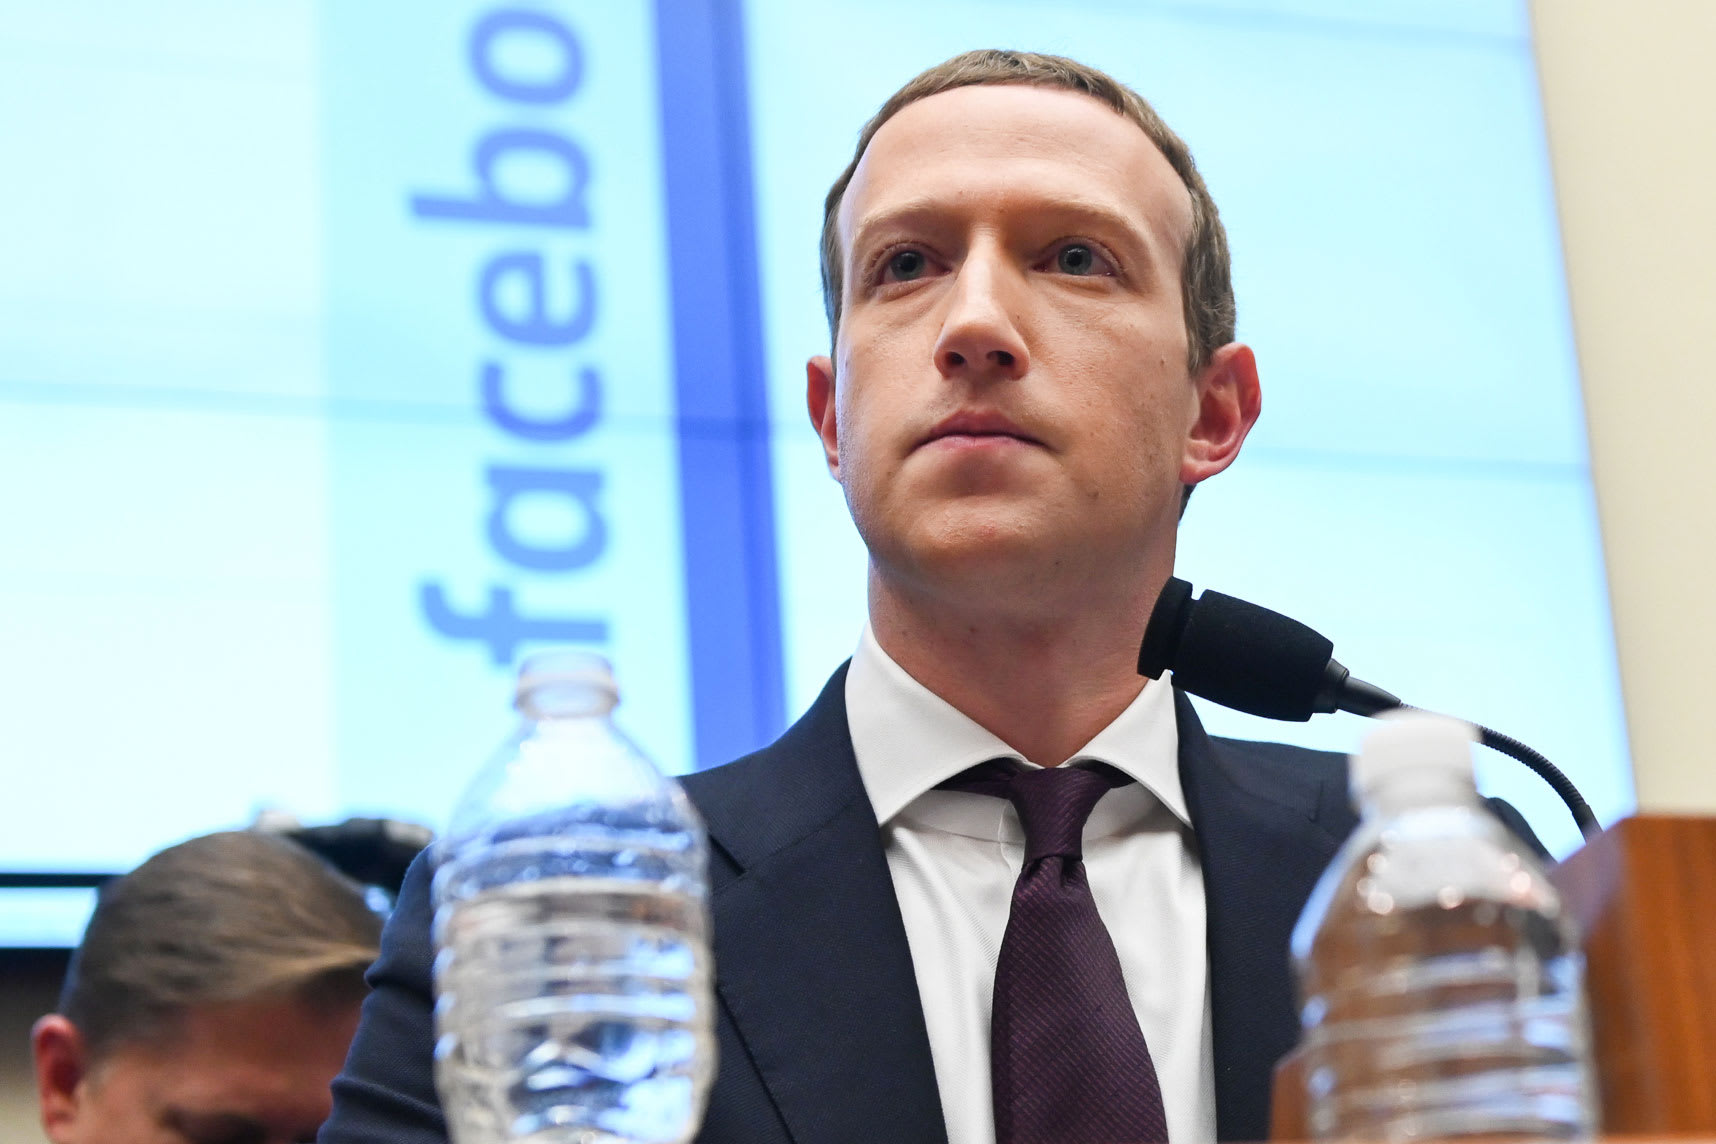 Facebook will prohibit hate speech in its ads